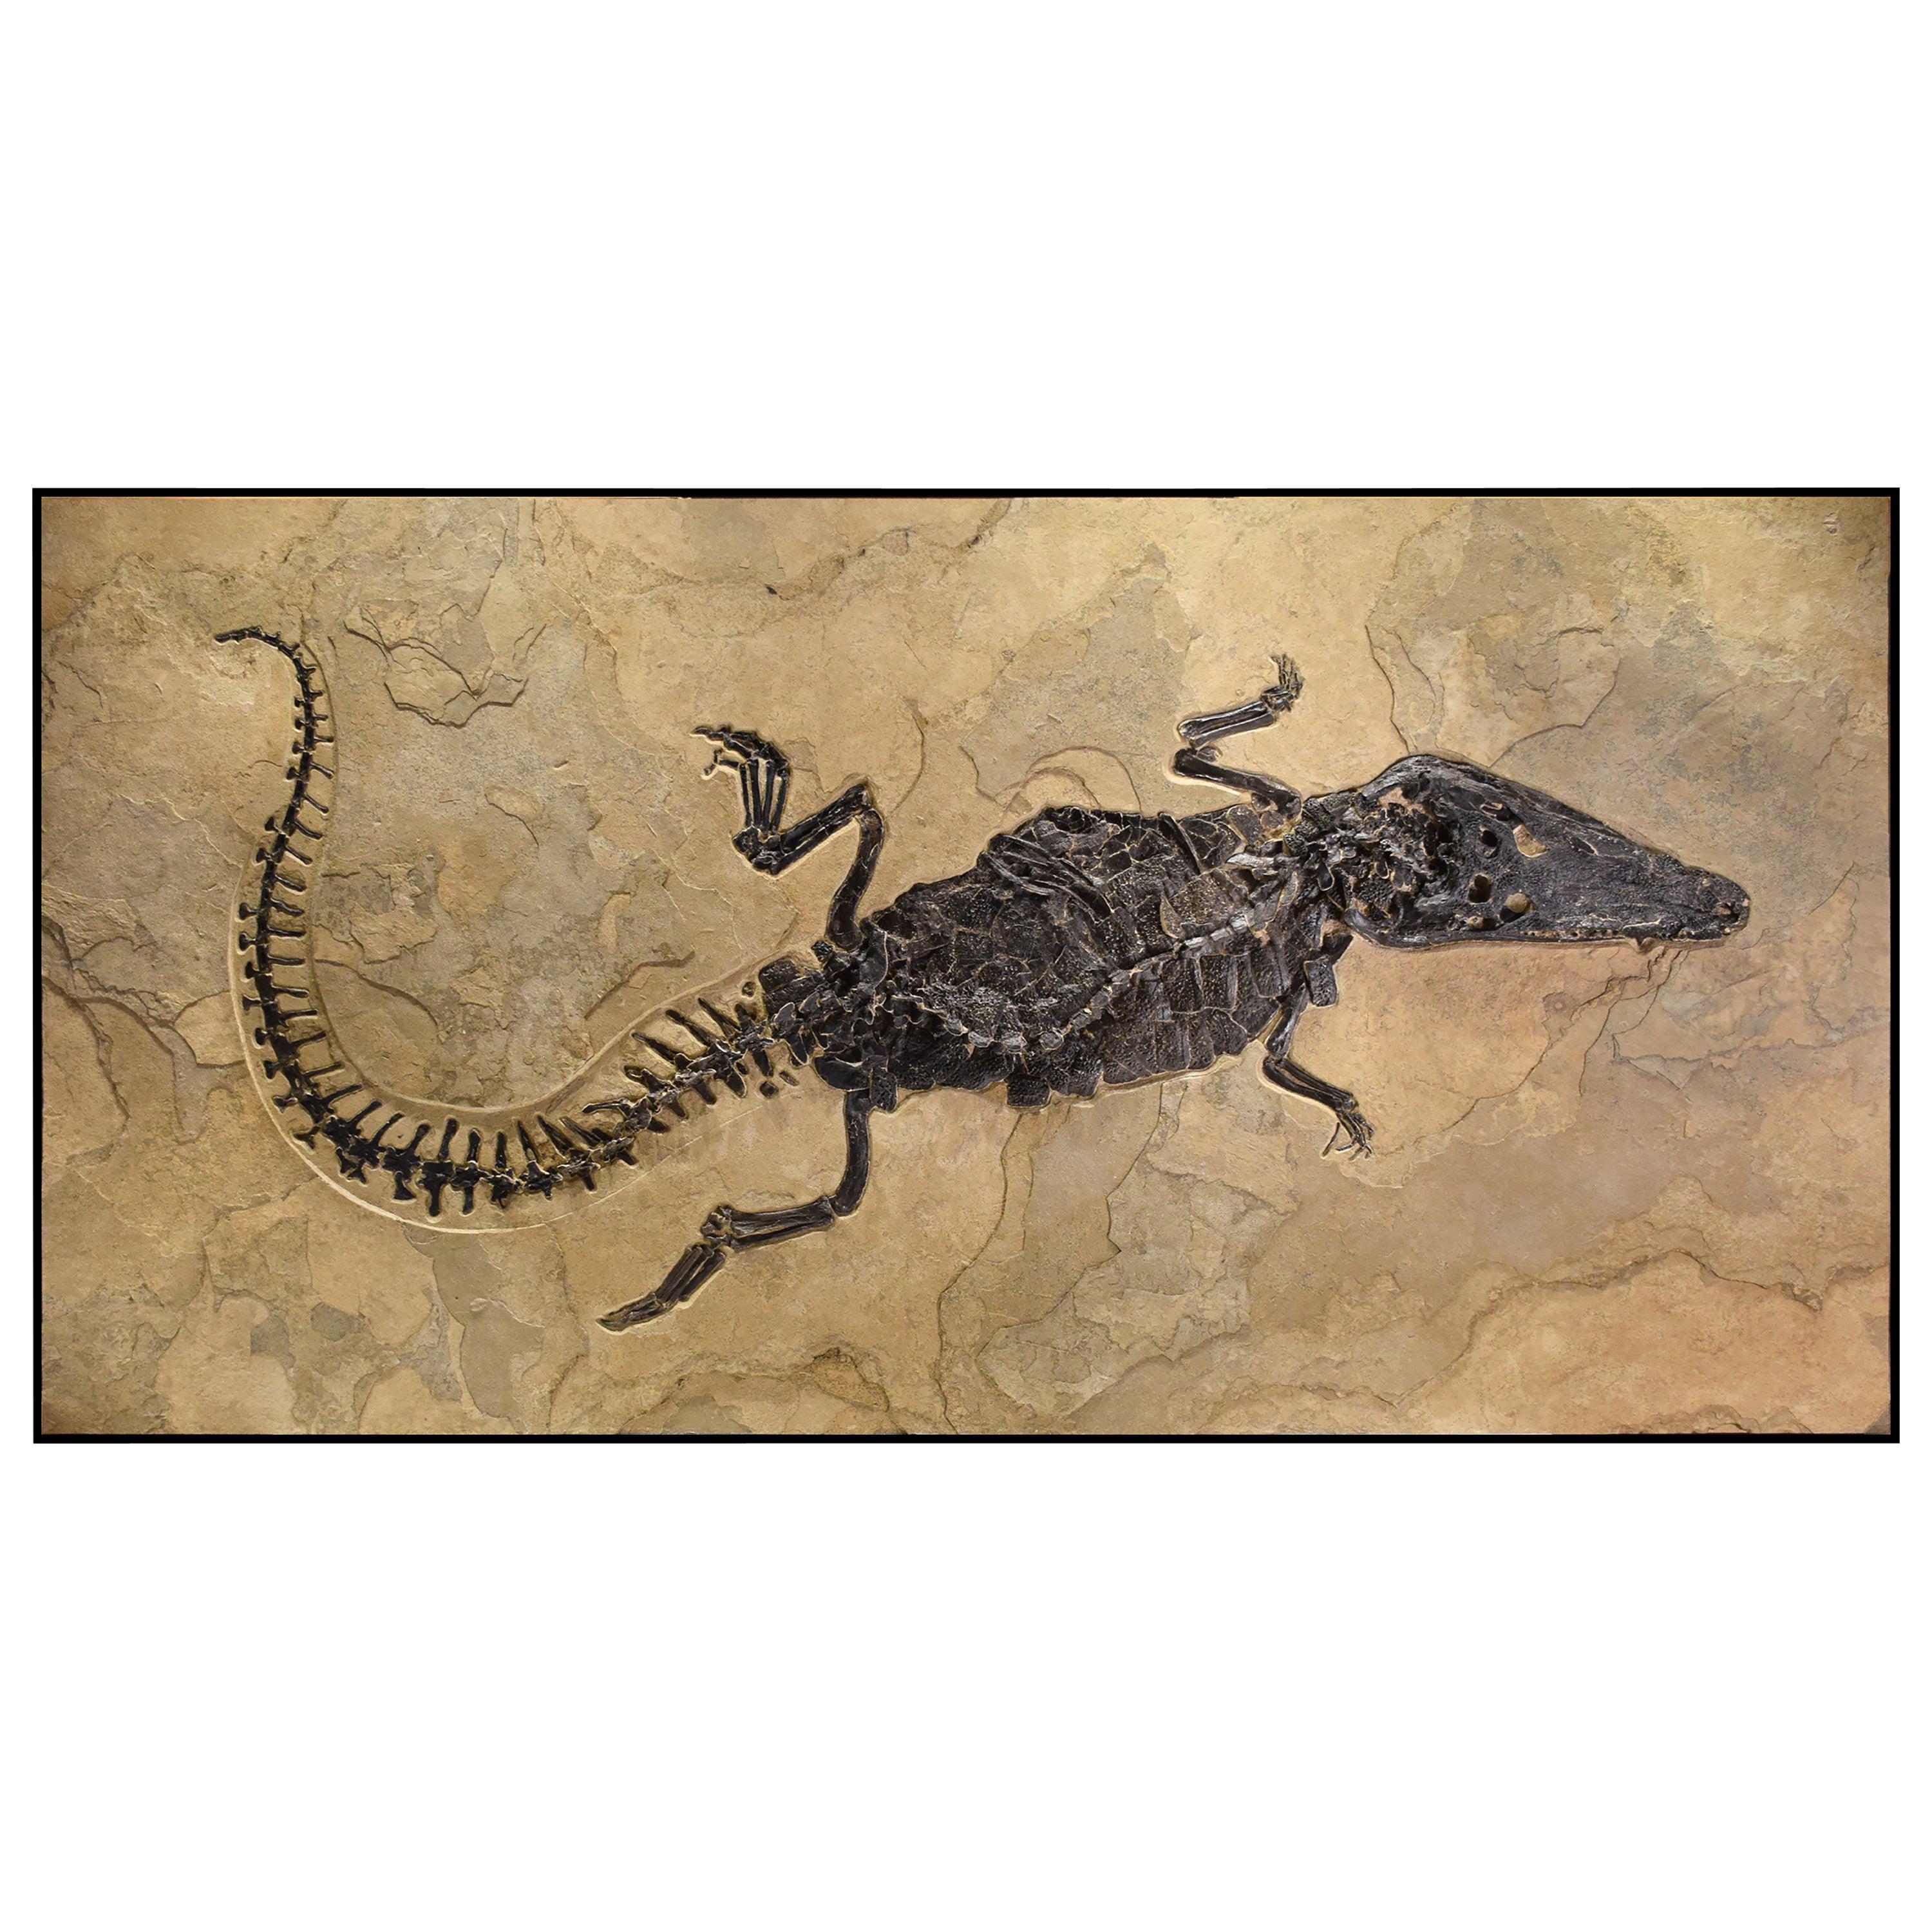 50 Million Year Old Eocene Era Fossil Crocodile Specimen in Stone, from Wyoming